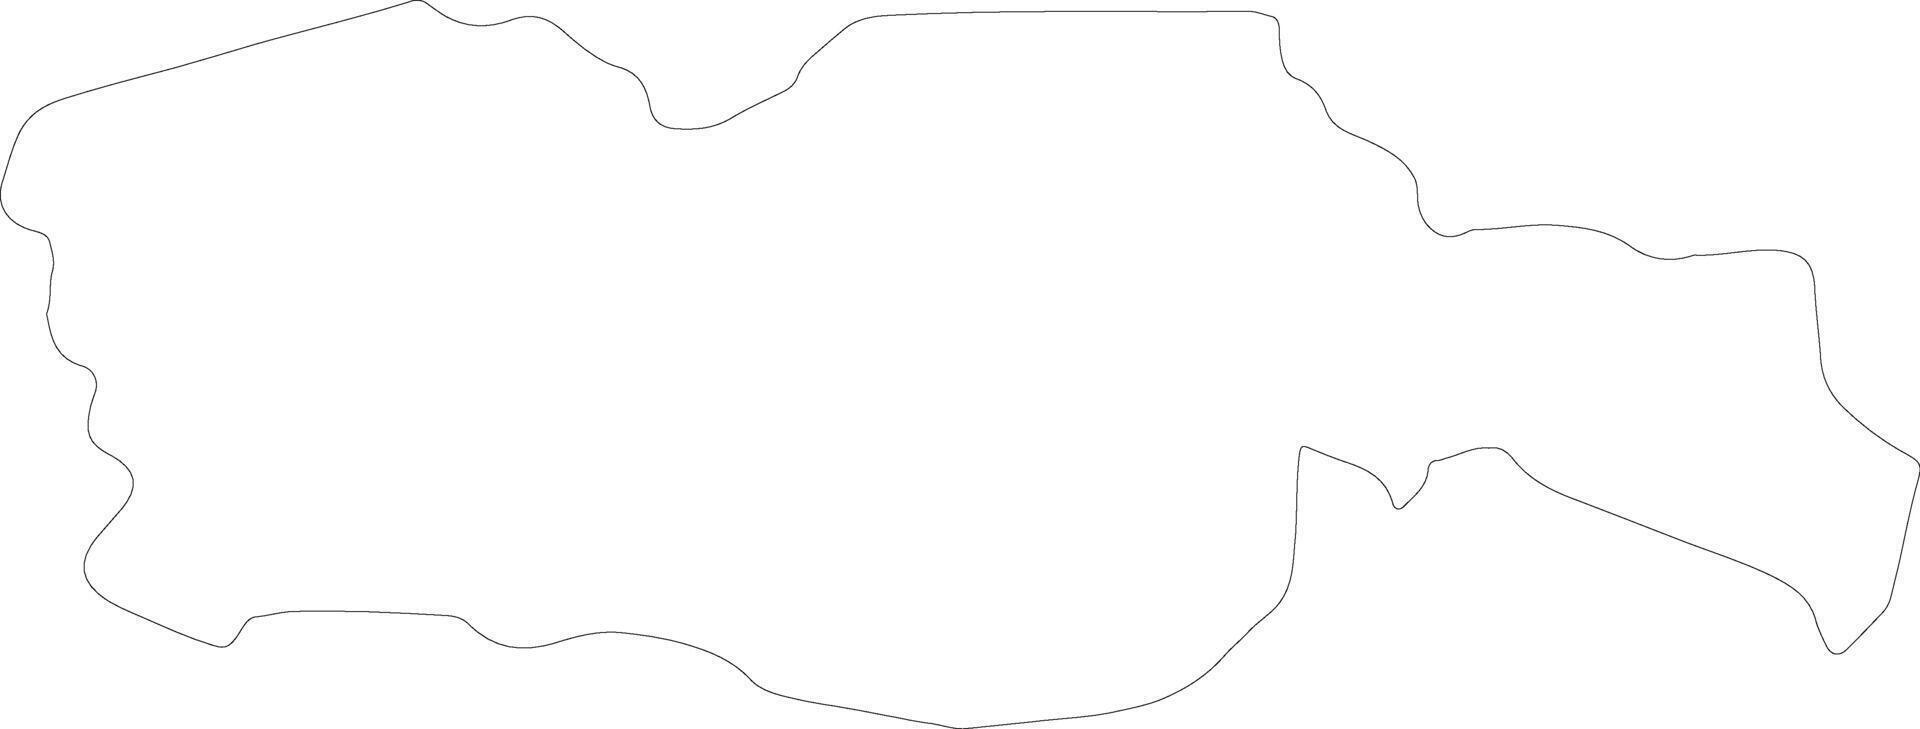 diourbel Sénégal contour carte vecteur